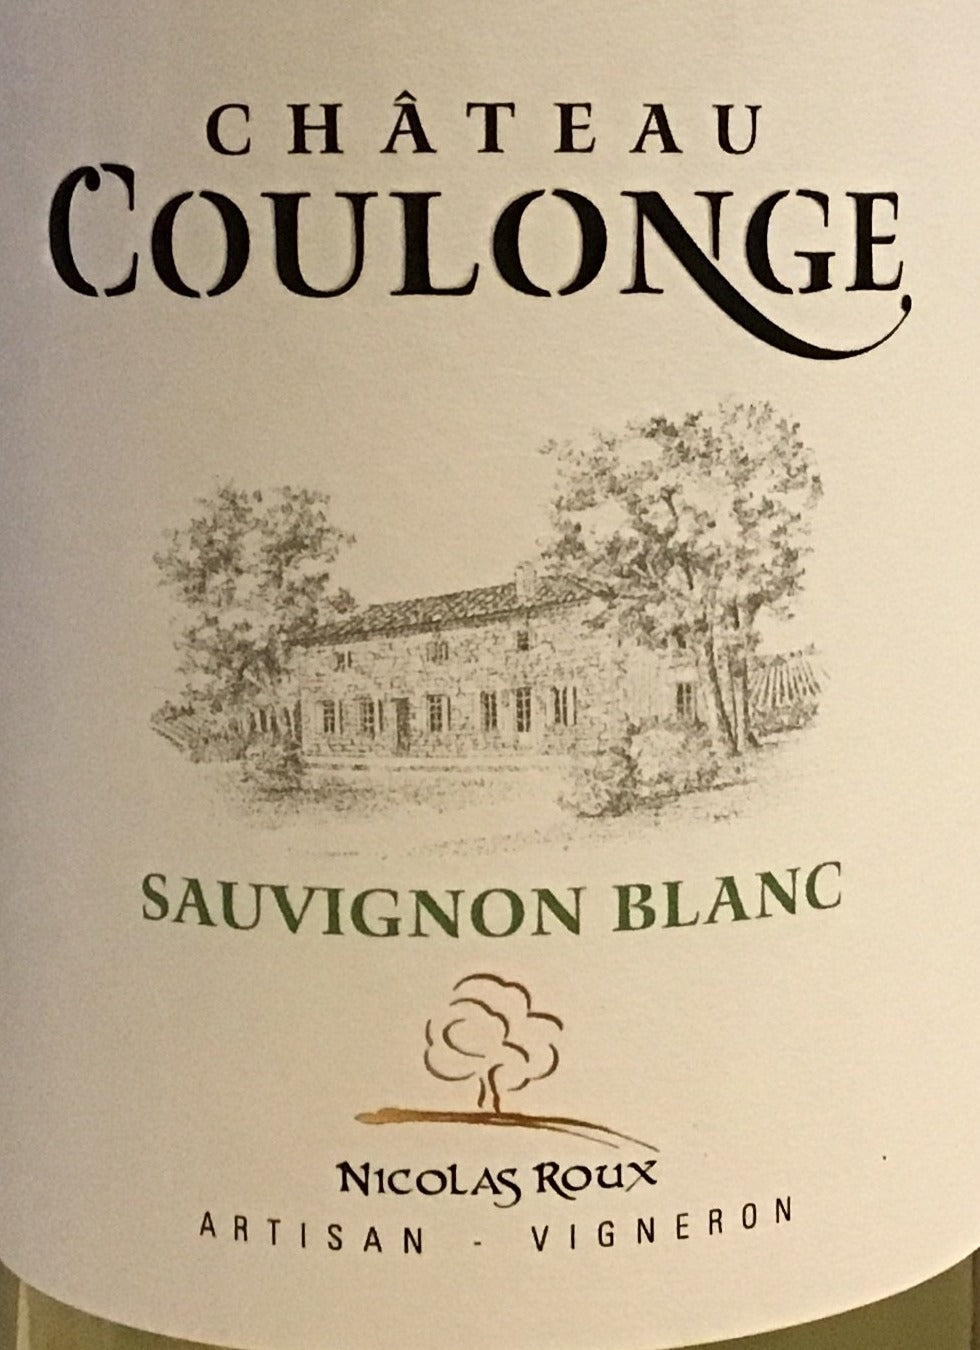 Chateau Coulonge - Sauvignon Blanc